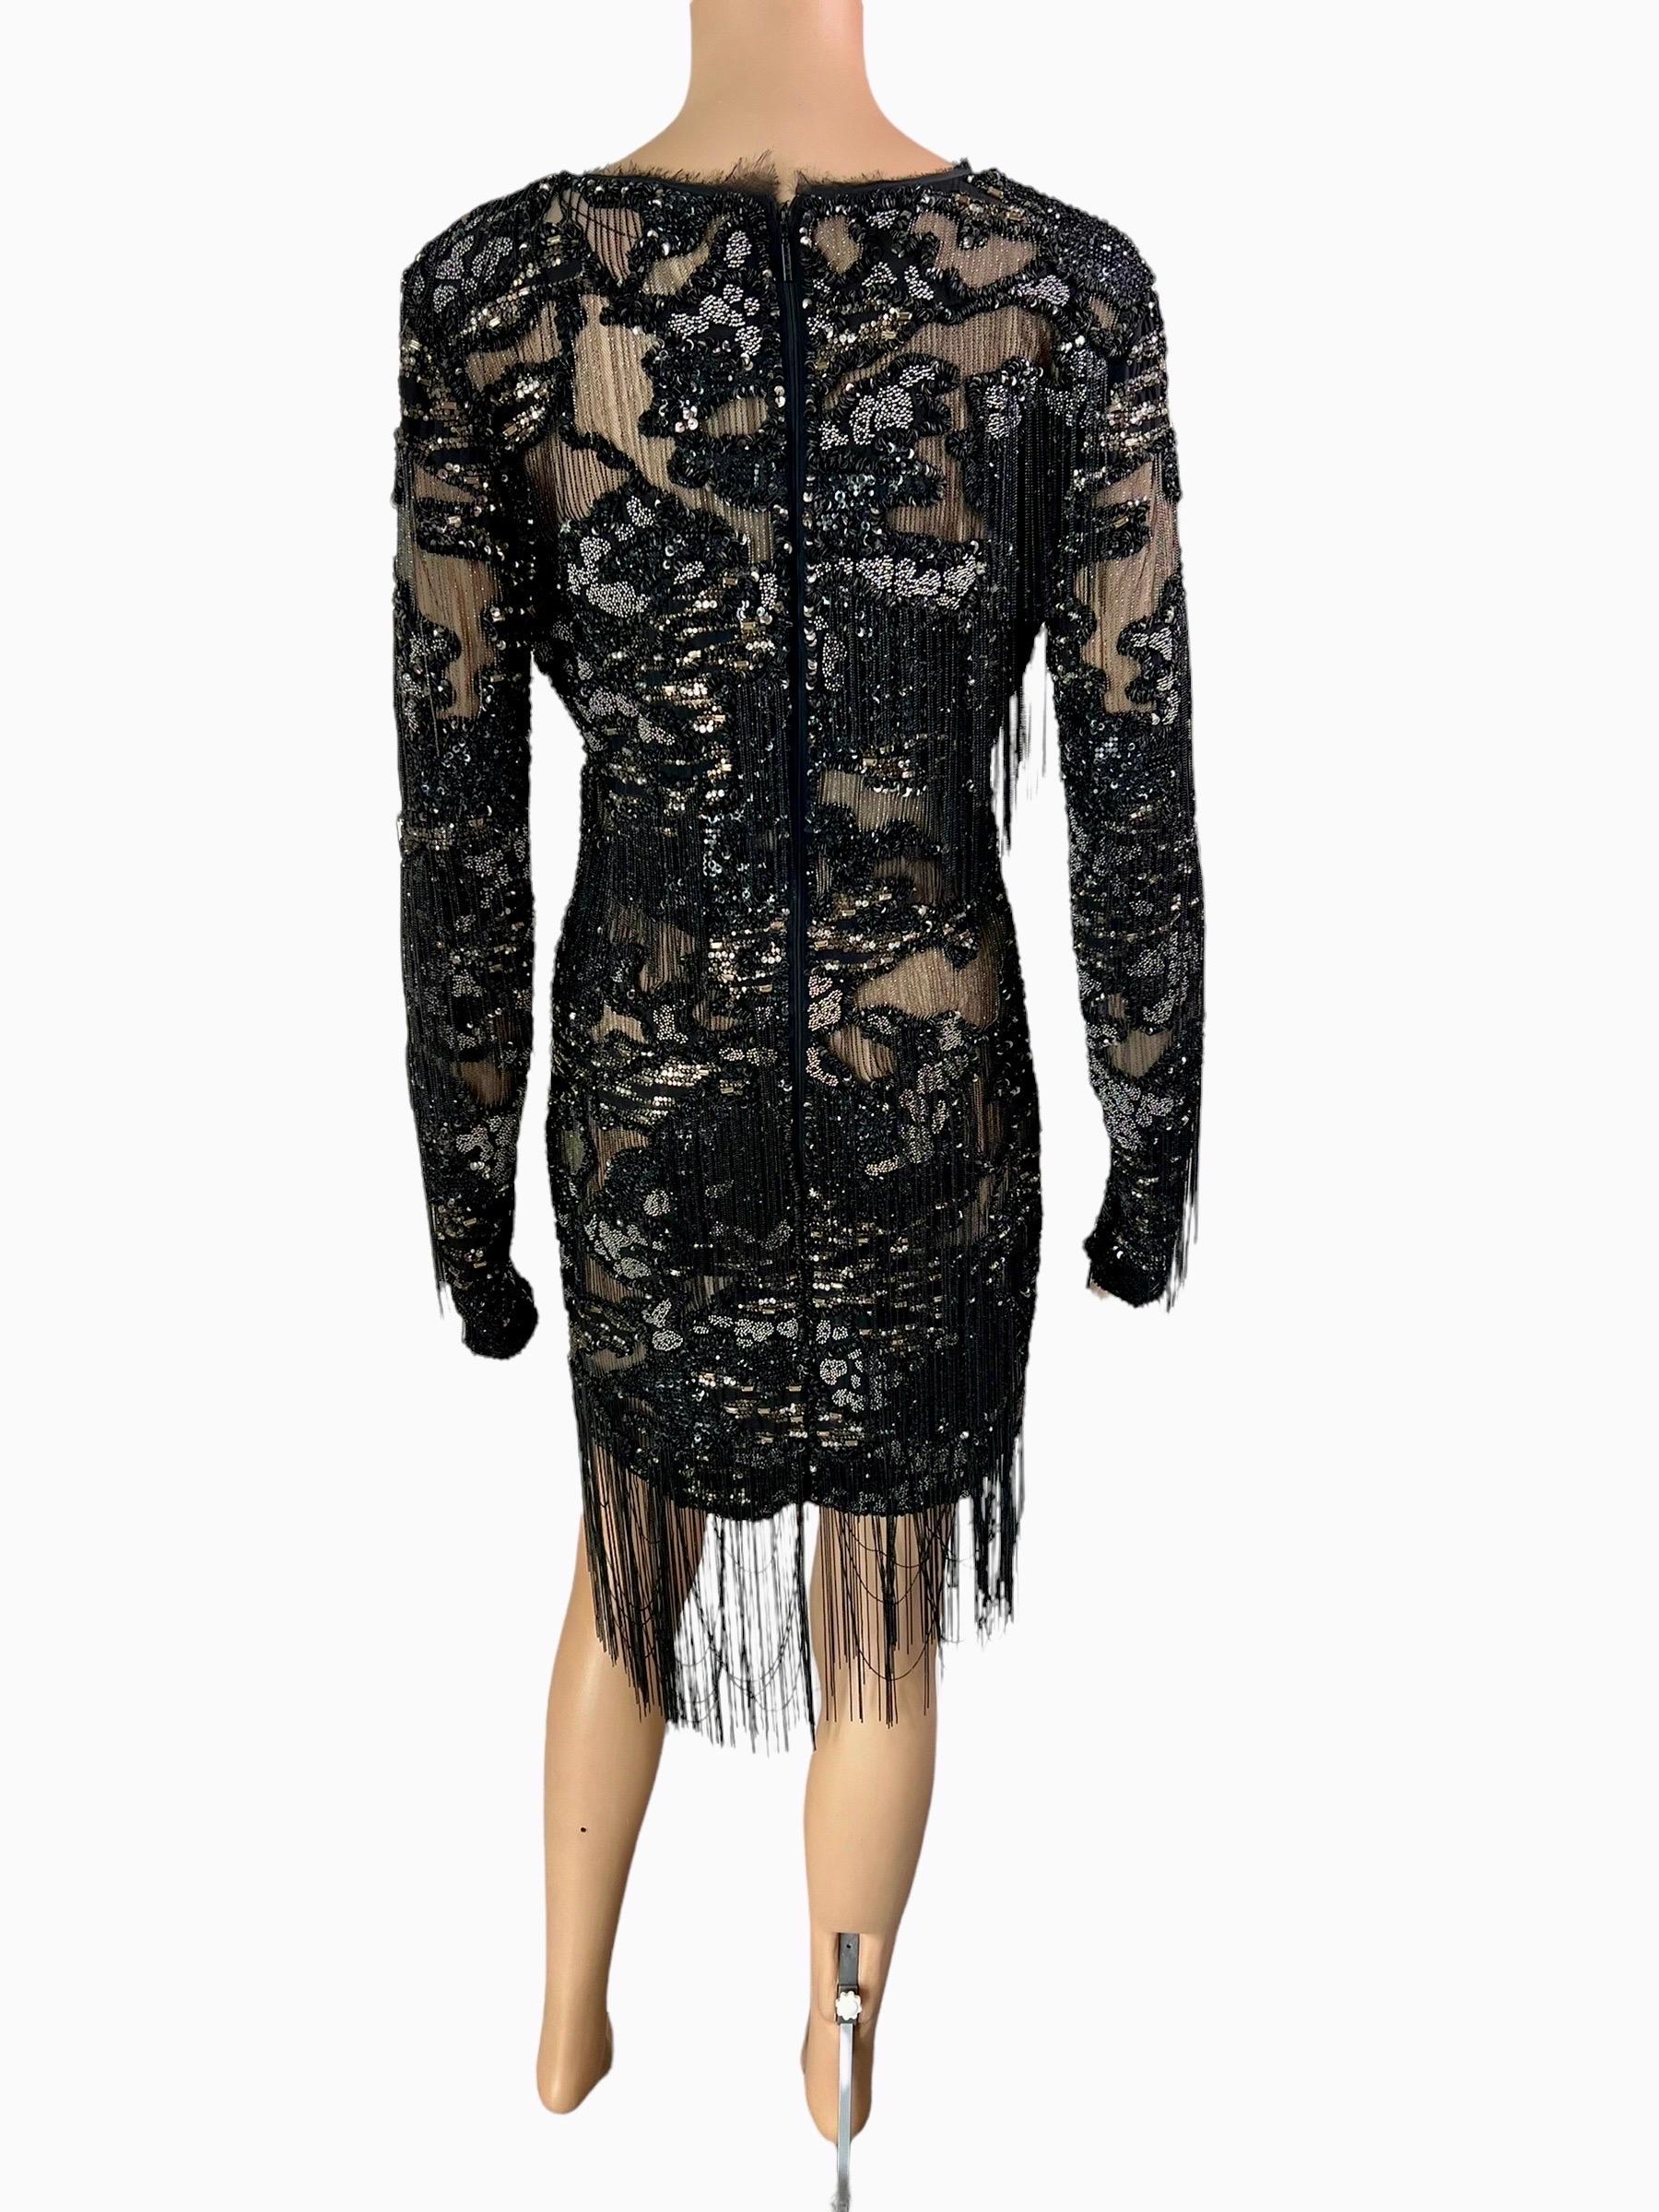 Roberto Cavalli S/S 2016 Runway Embellished Chain Sheer Black Mini Evening Dress For Sale 3